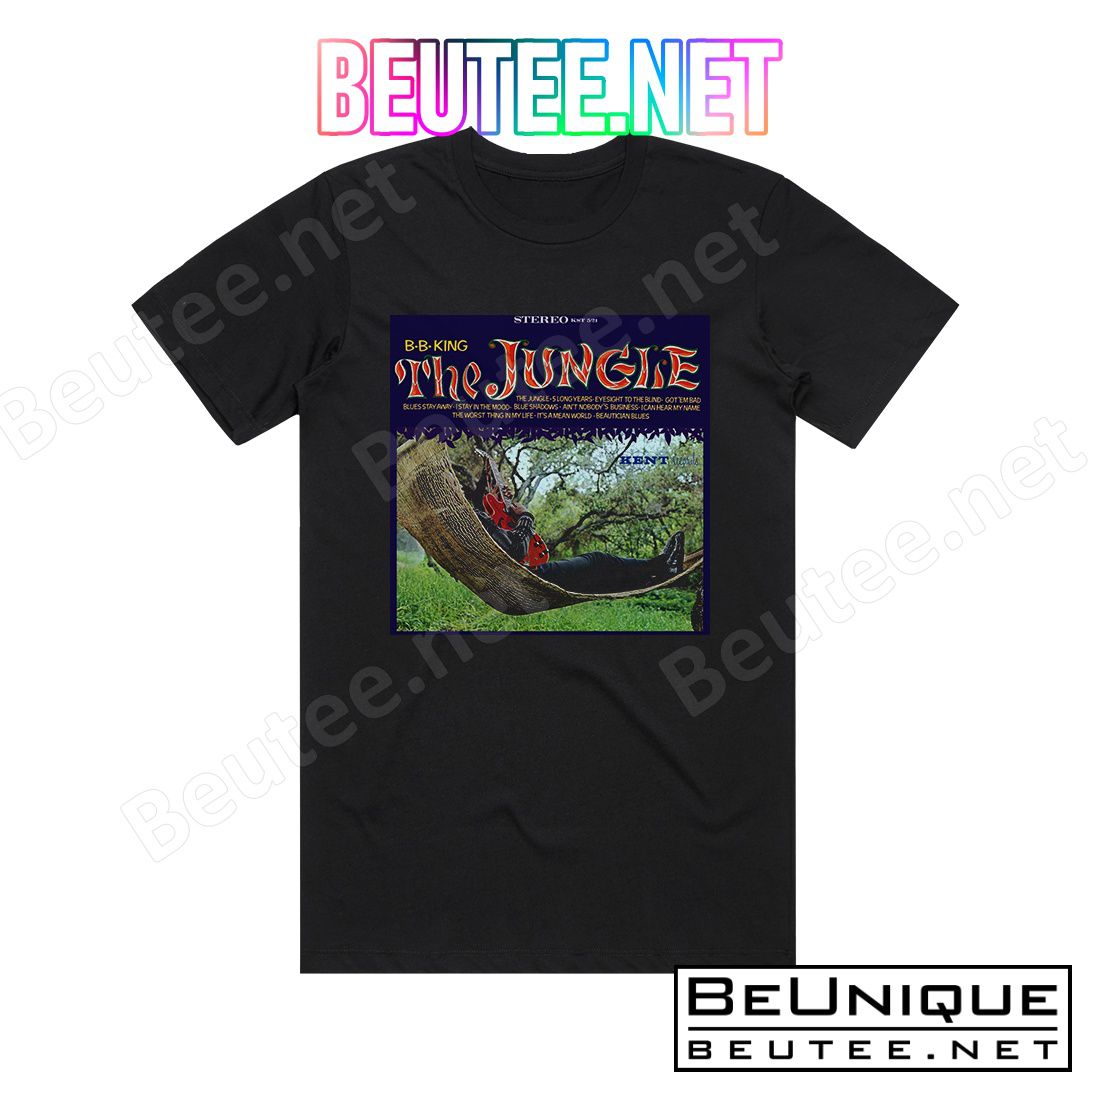 BB King The Jungle 2 Album Cover T-Shirt